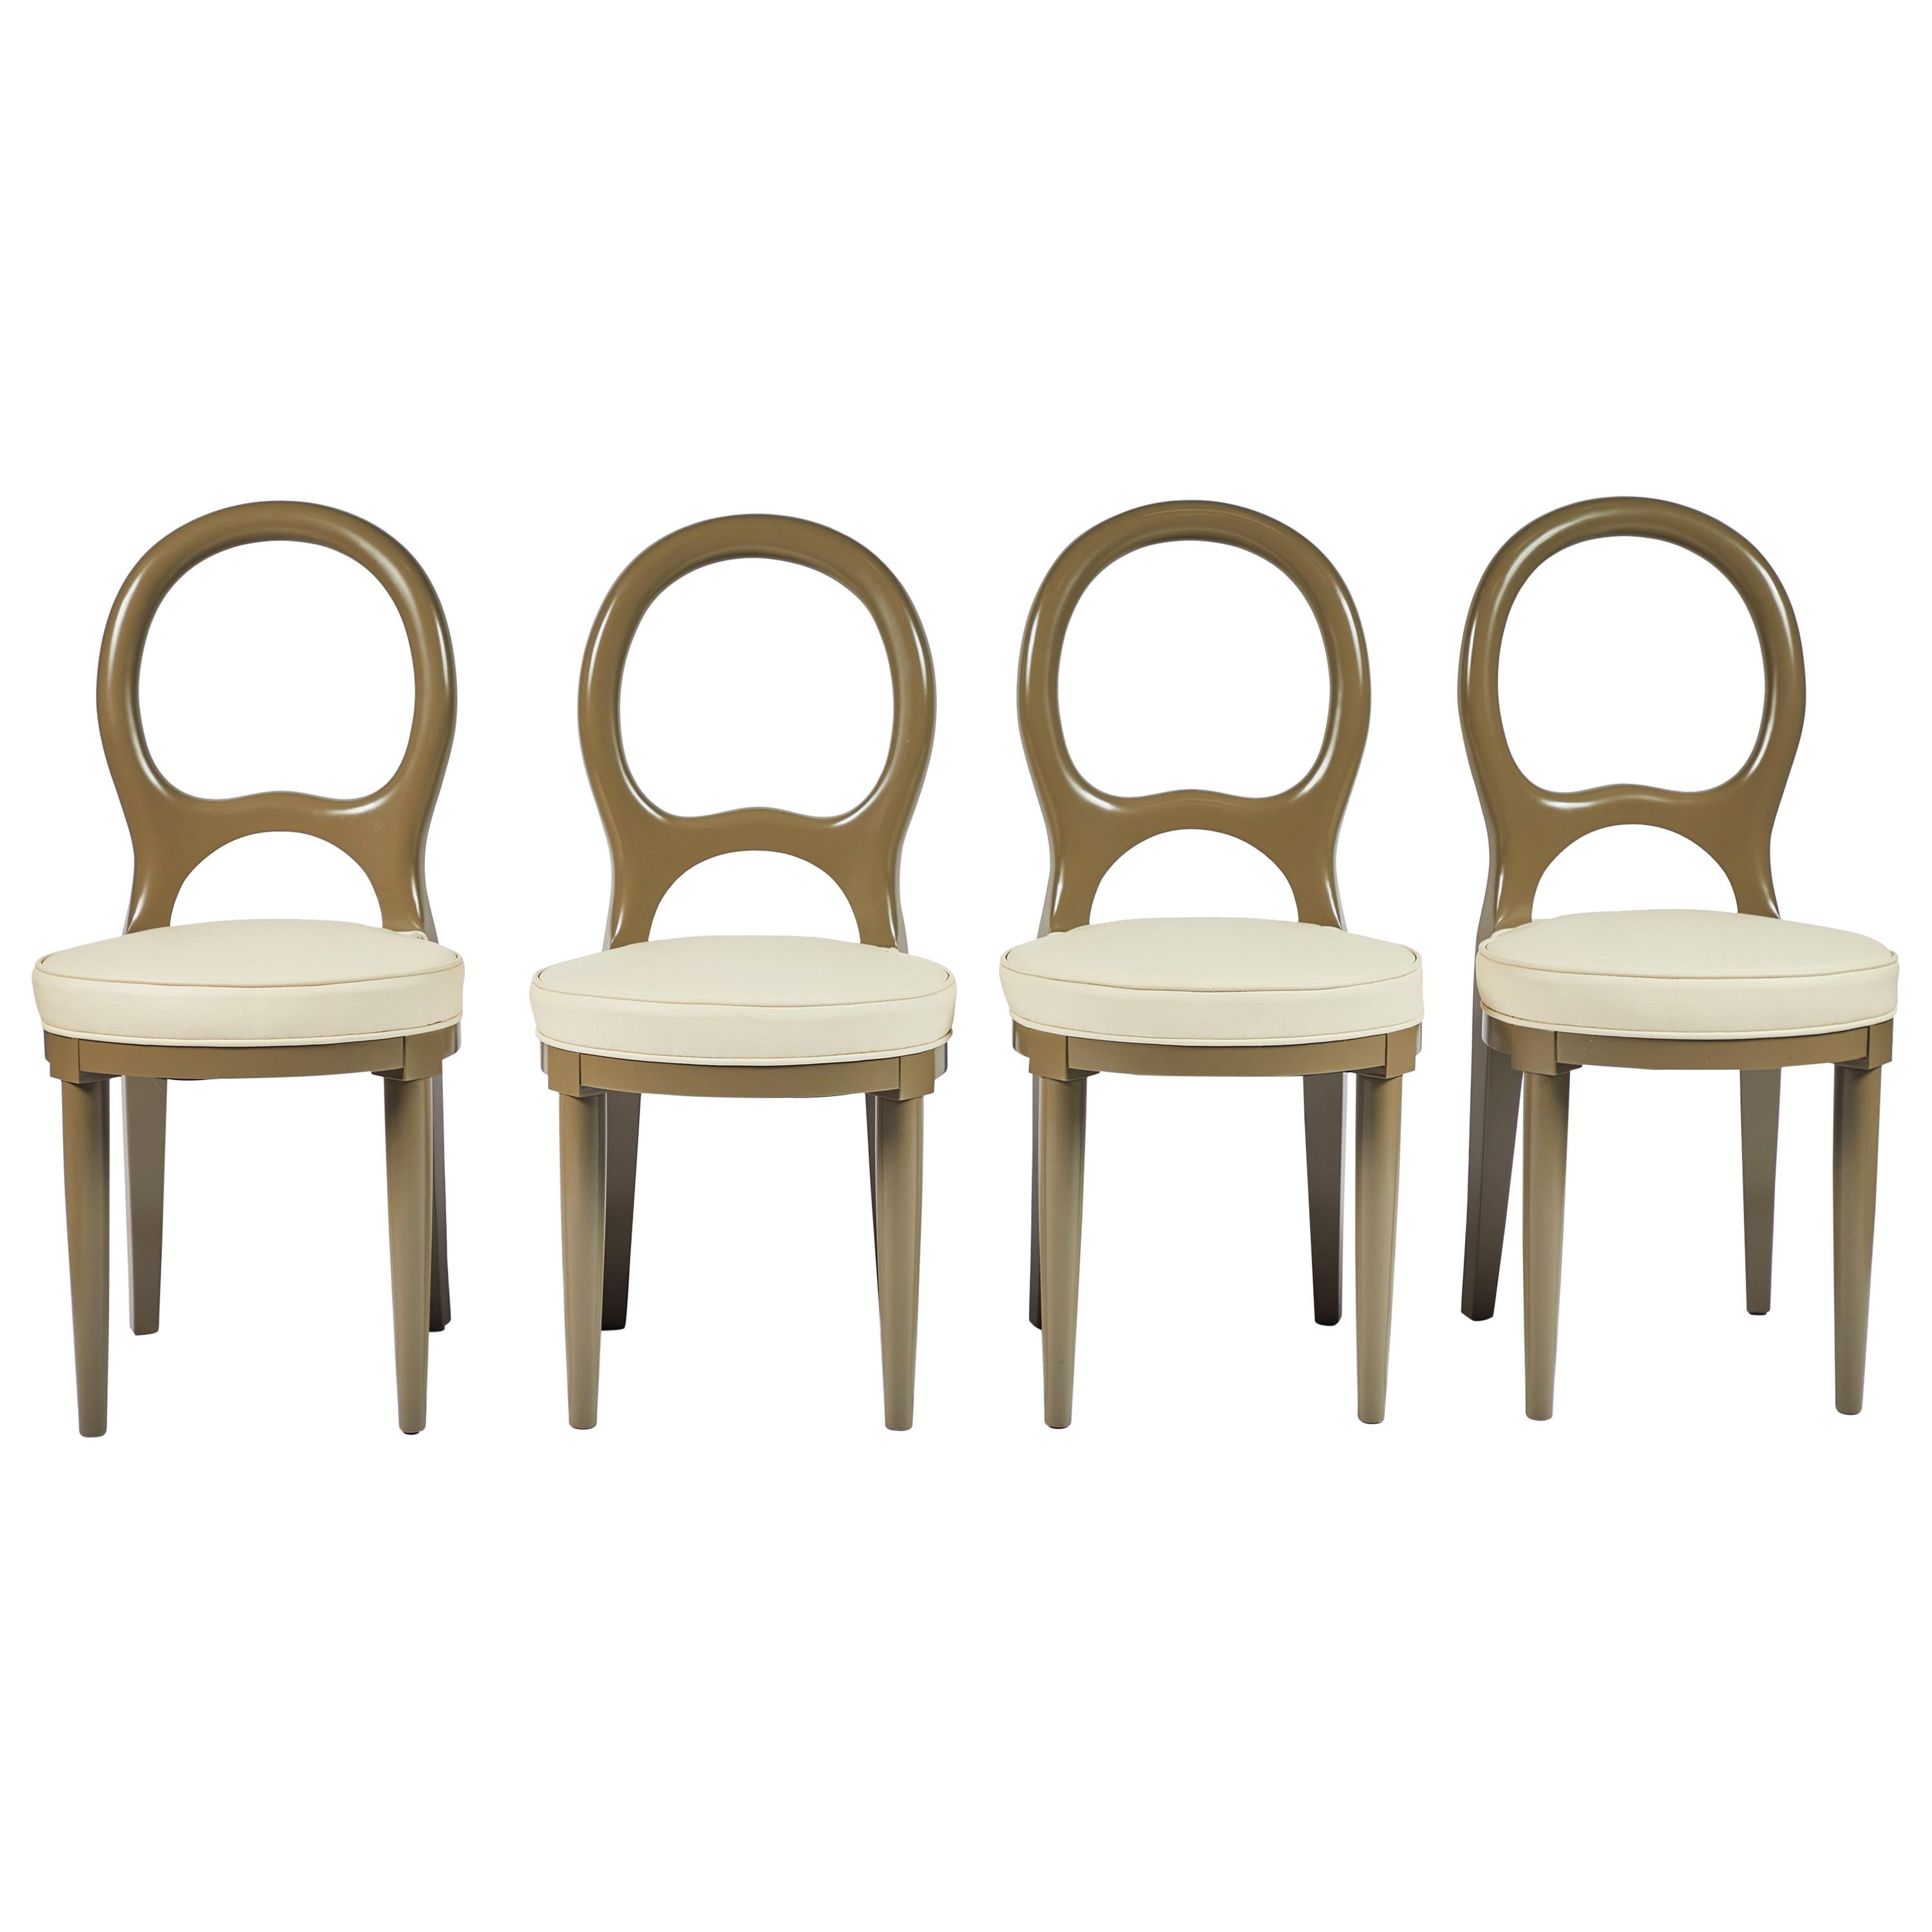 Bilou Bilou Dining Chairs, Set of 4